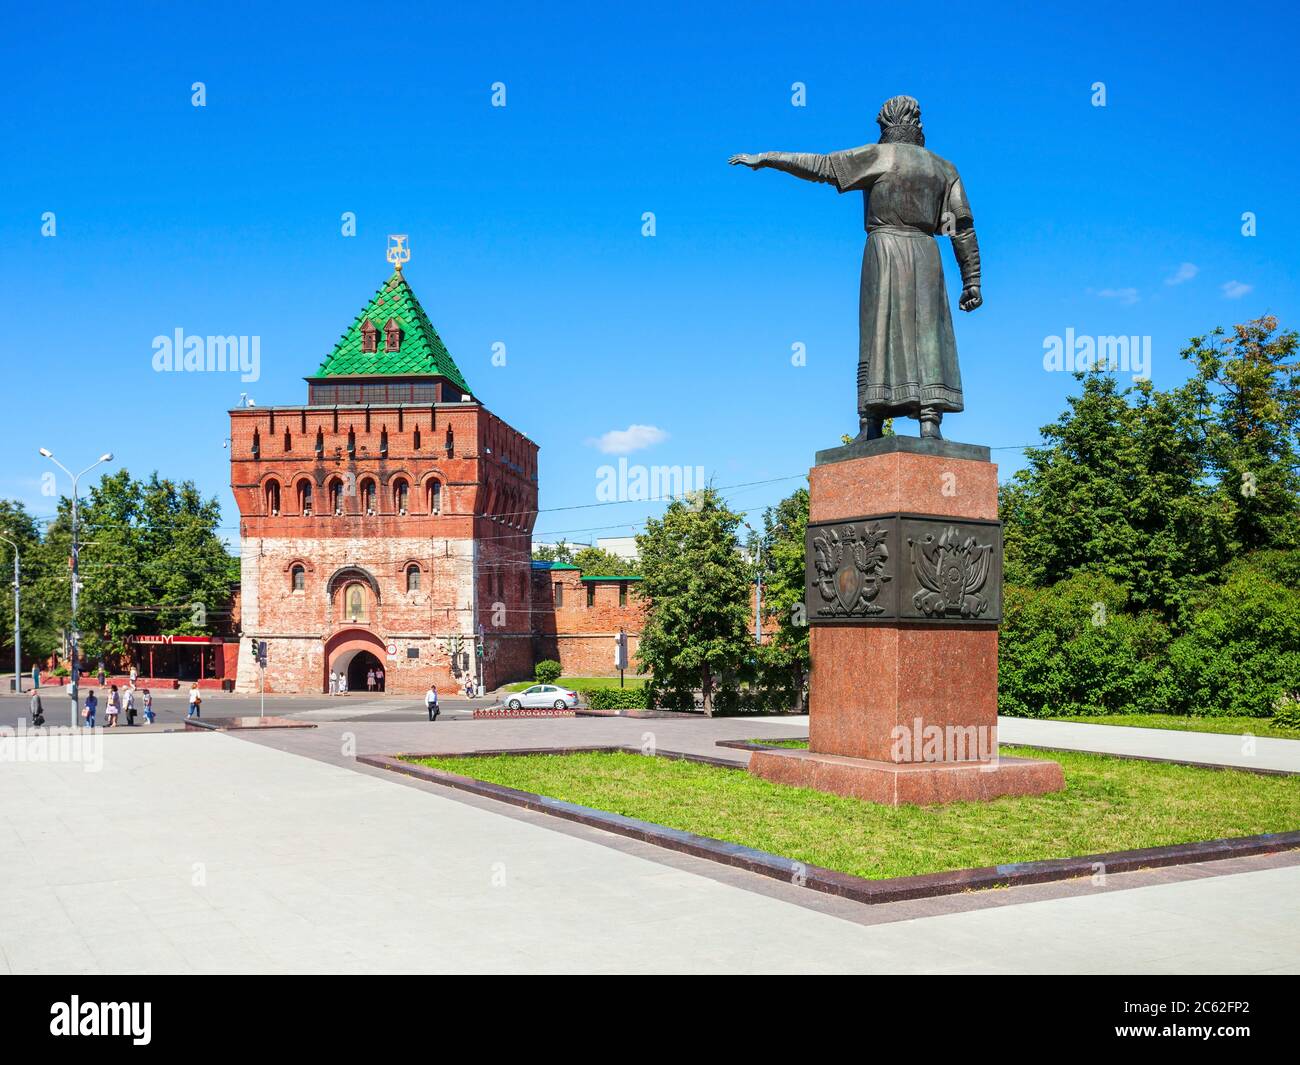 Kuzma Minin monument and Tower of Demetrius or Dmitrovskaya tower in the Nizhny Novgorod Kremlin. Kremlin is a fortress in the historic city center of Stock Photo